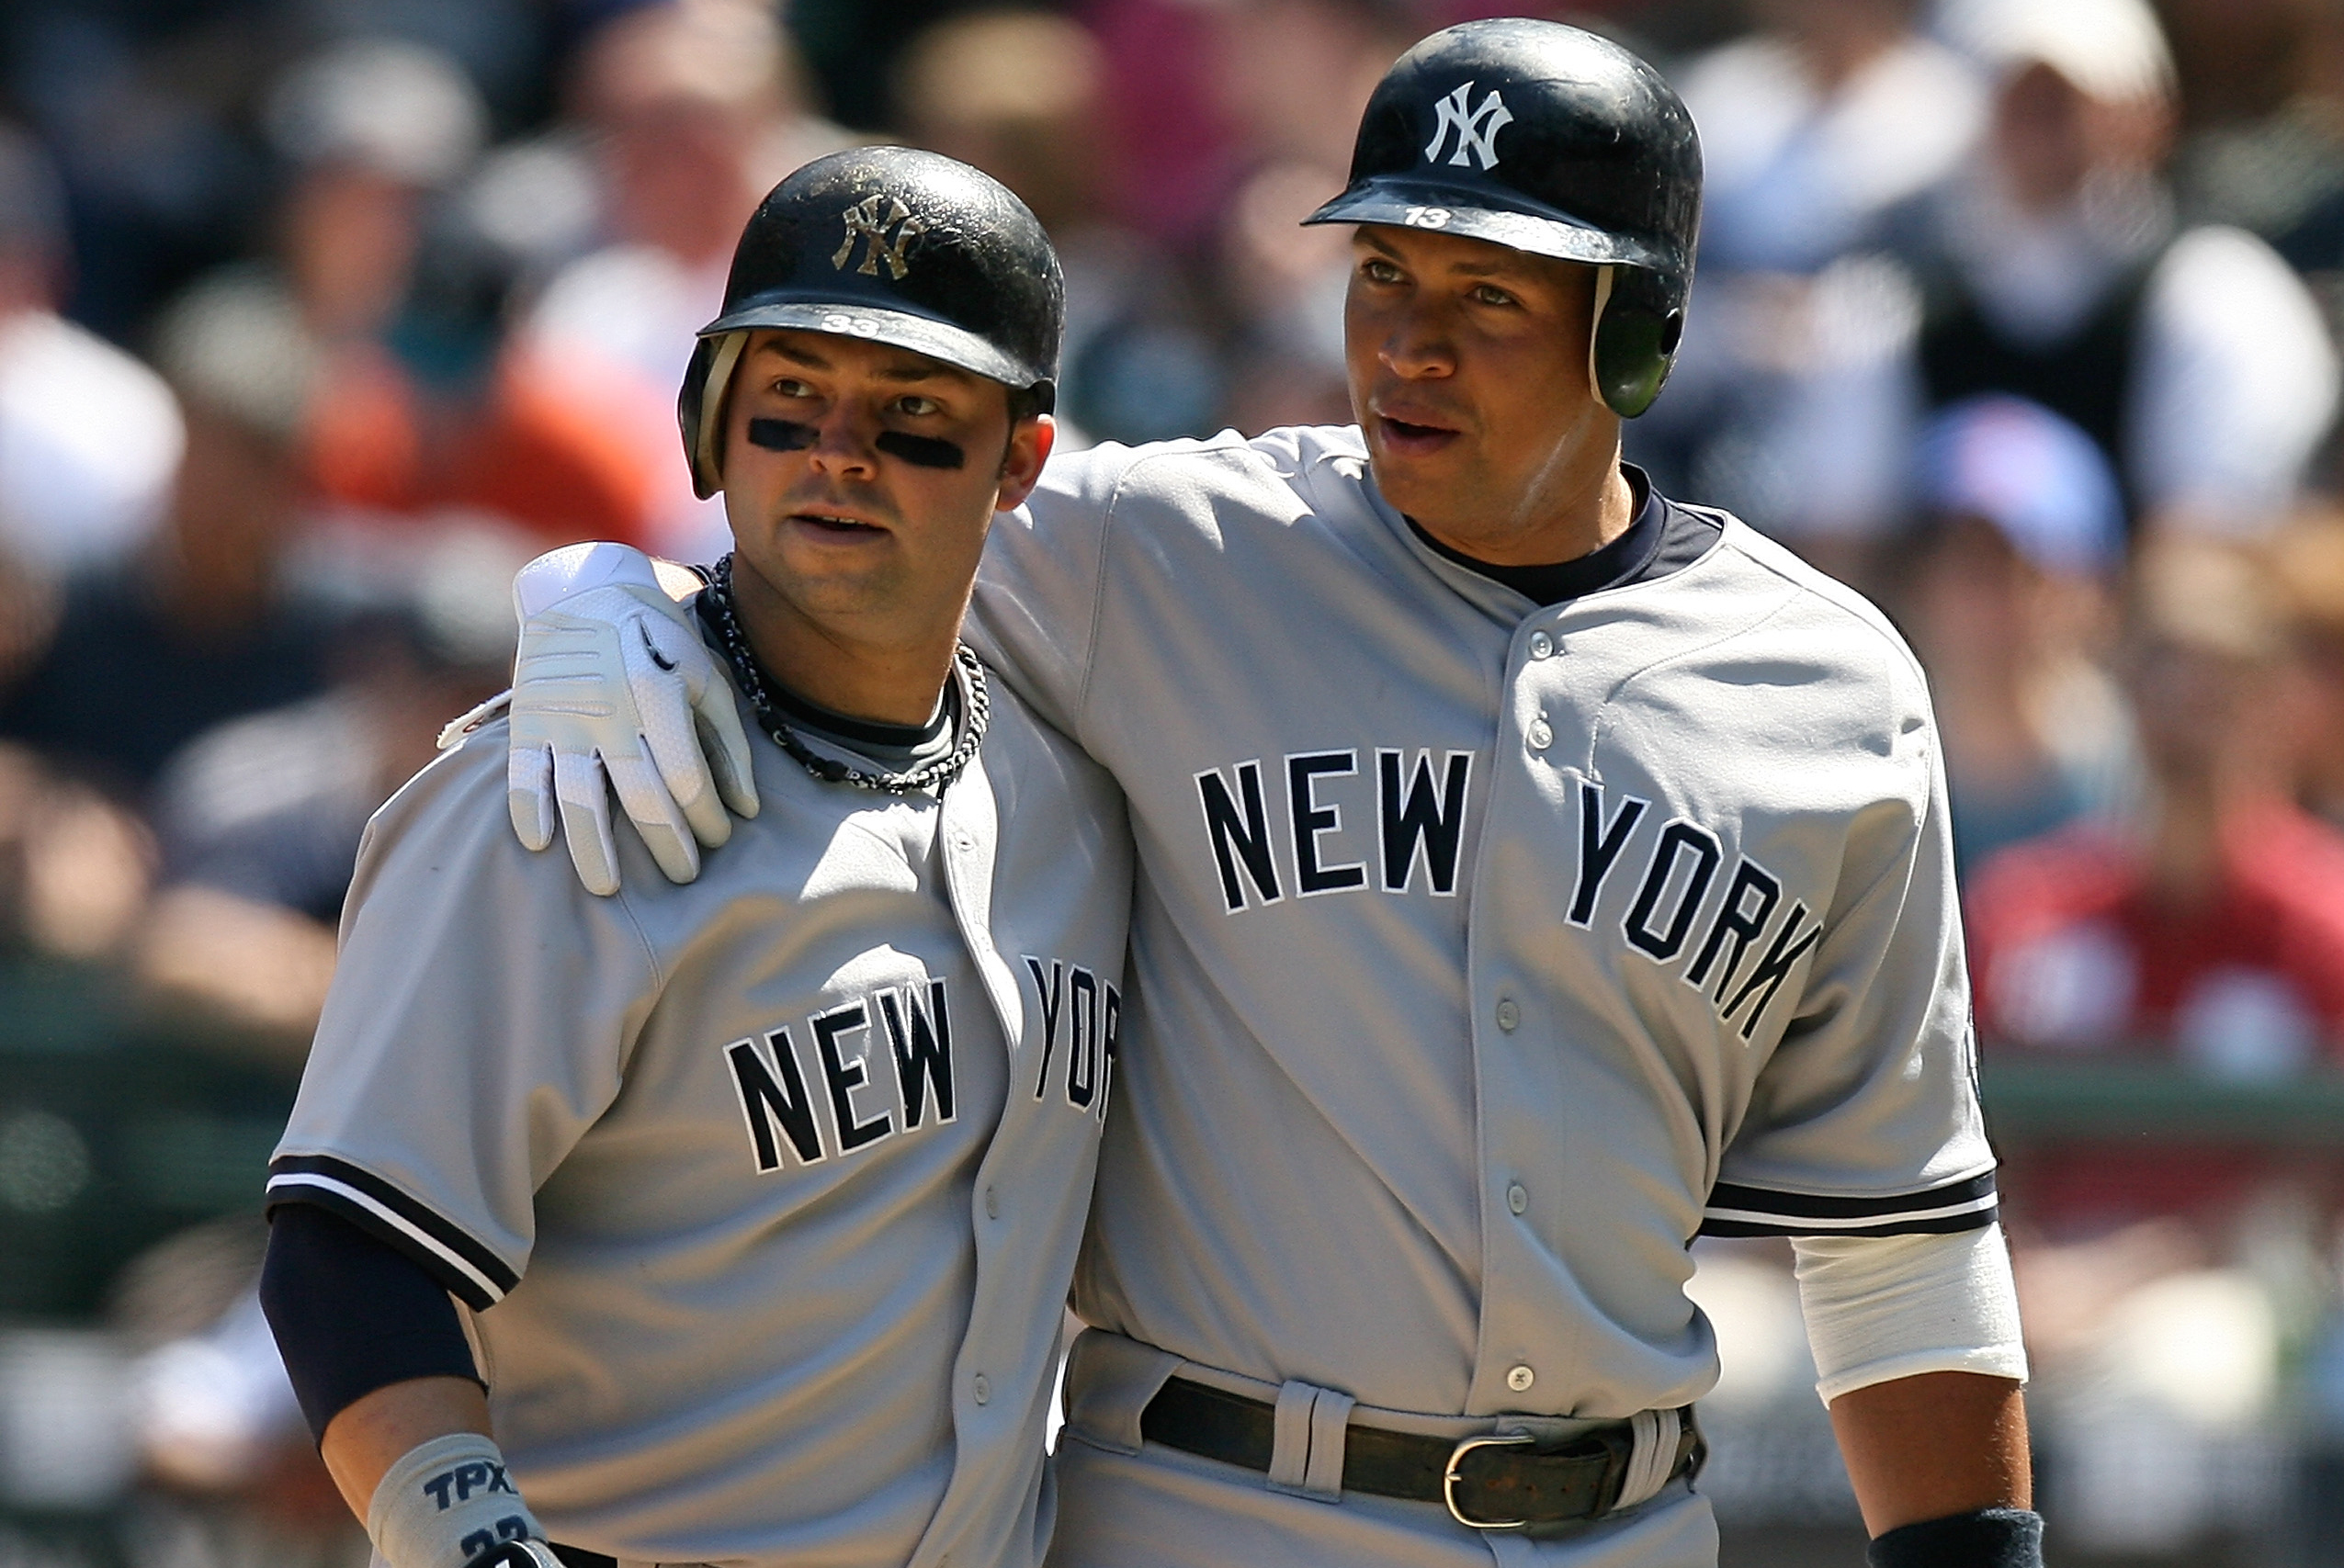 Yankees spring training: Team bonding with Nick Swisher